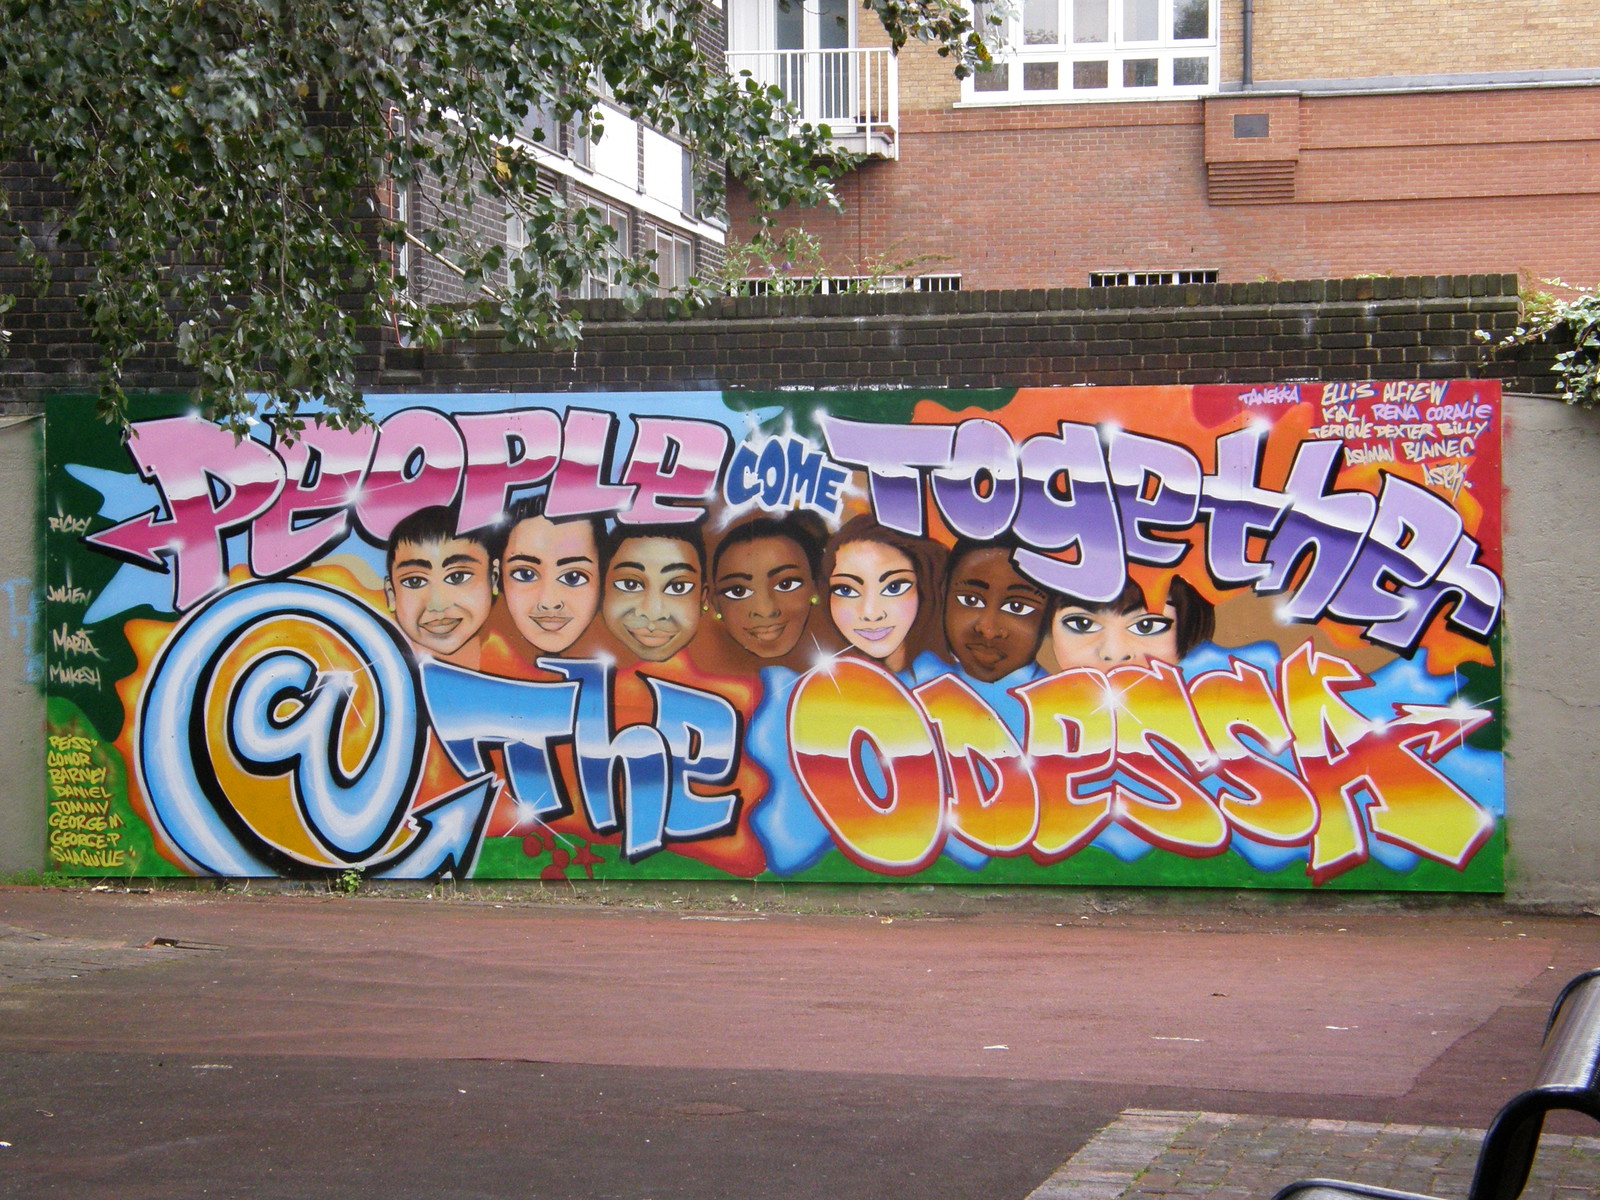 Amazing graffiti at the Odessa Street Youth Club